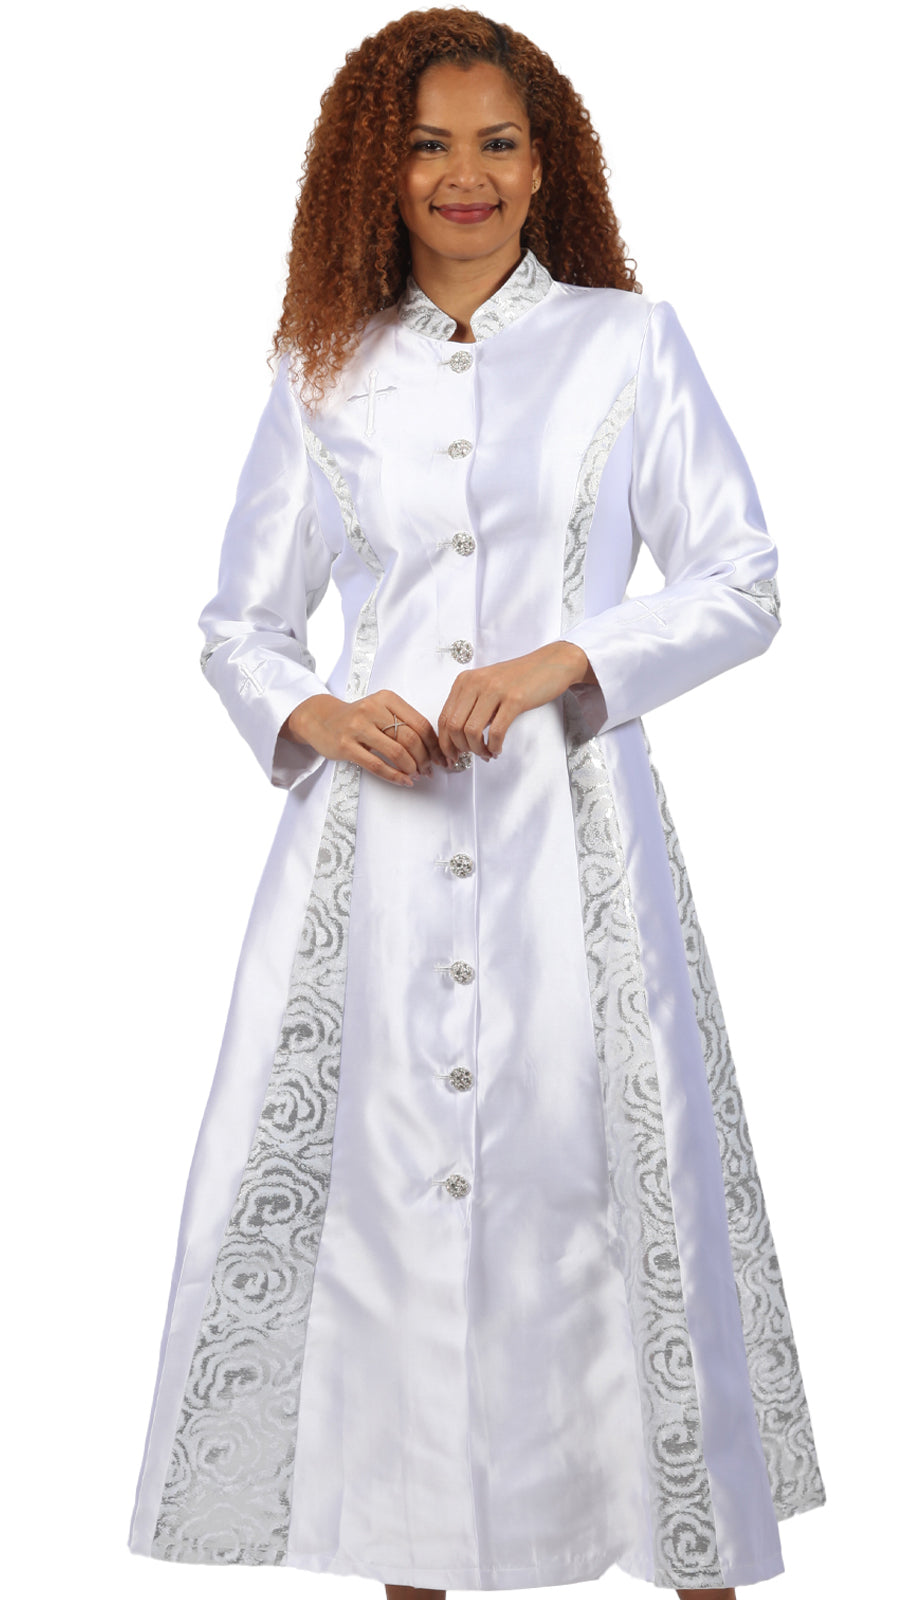 Diana Couture 8890-WHT Church Dress